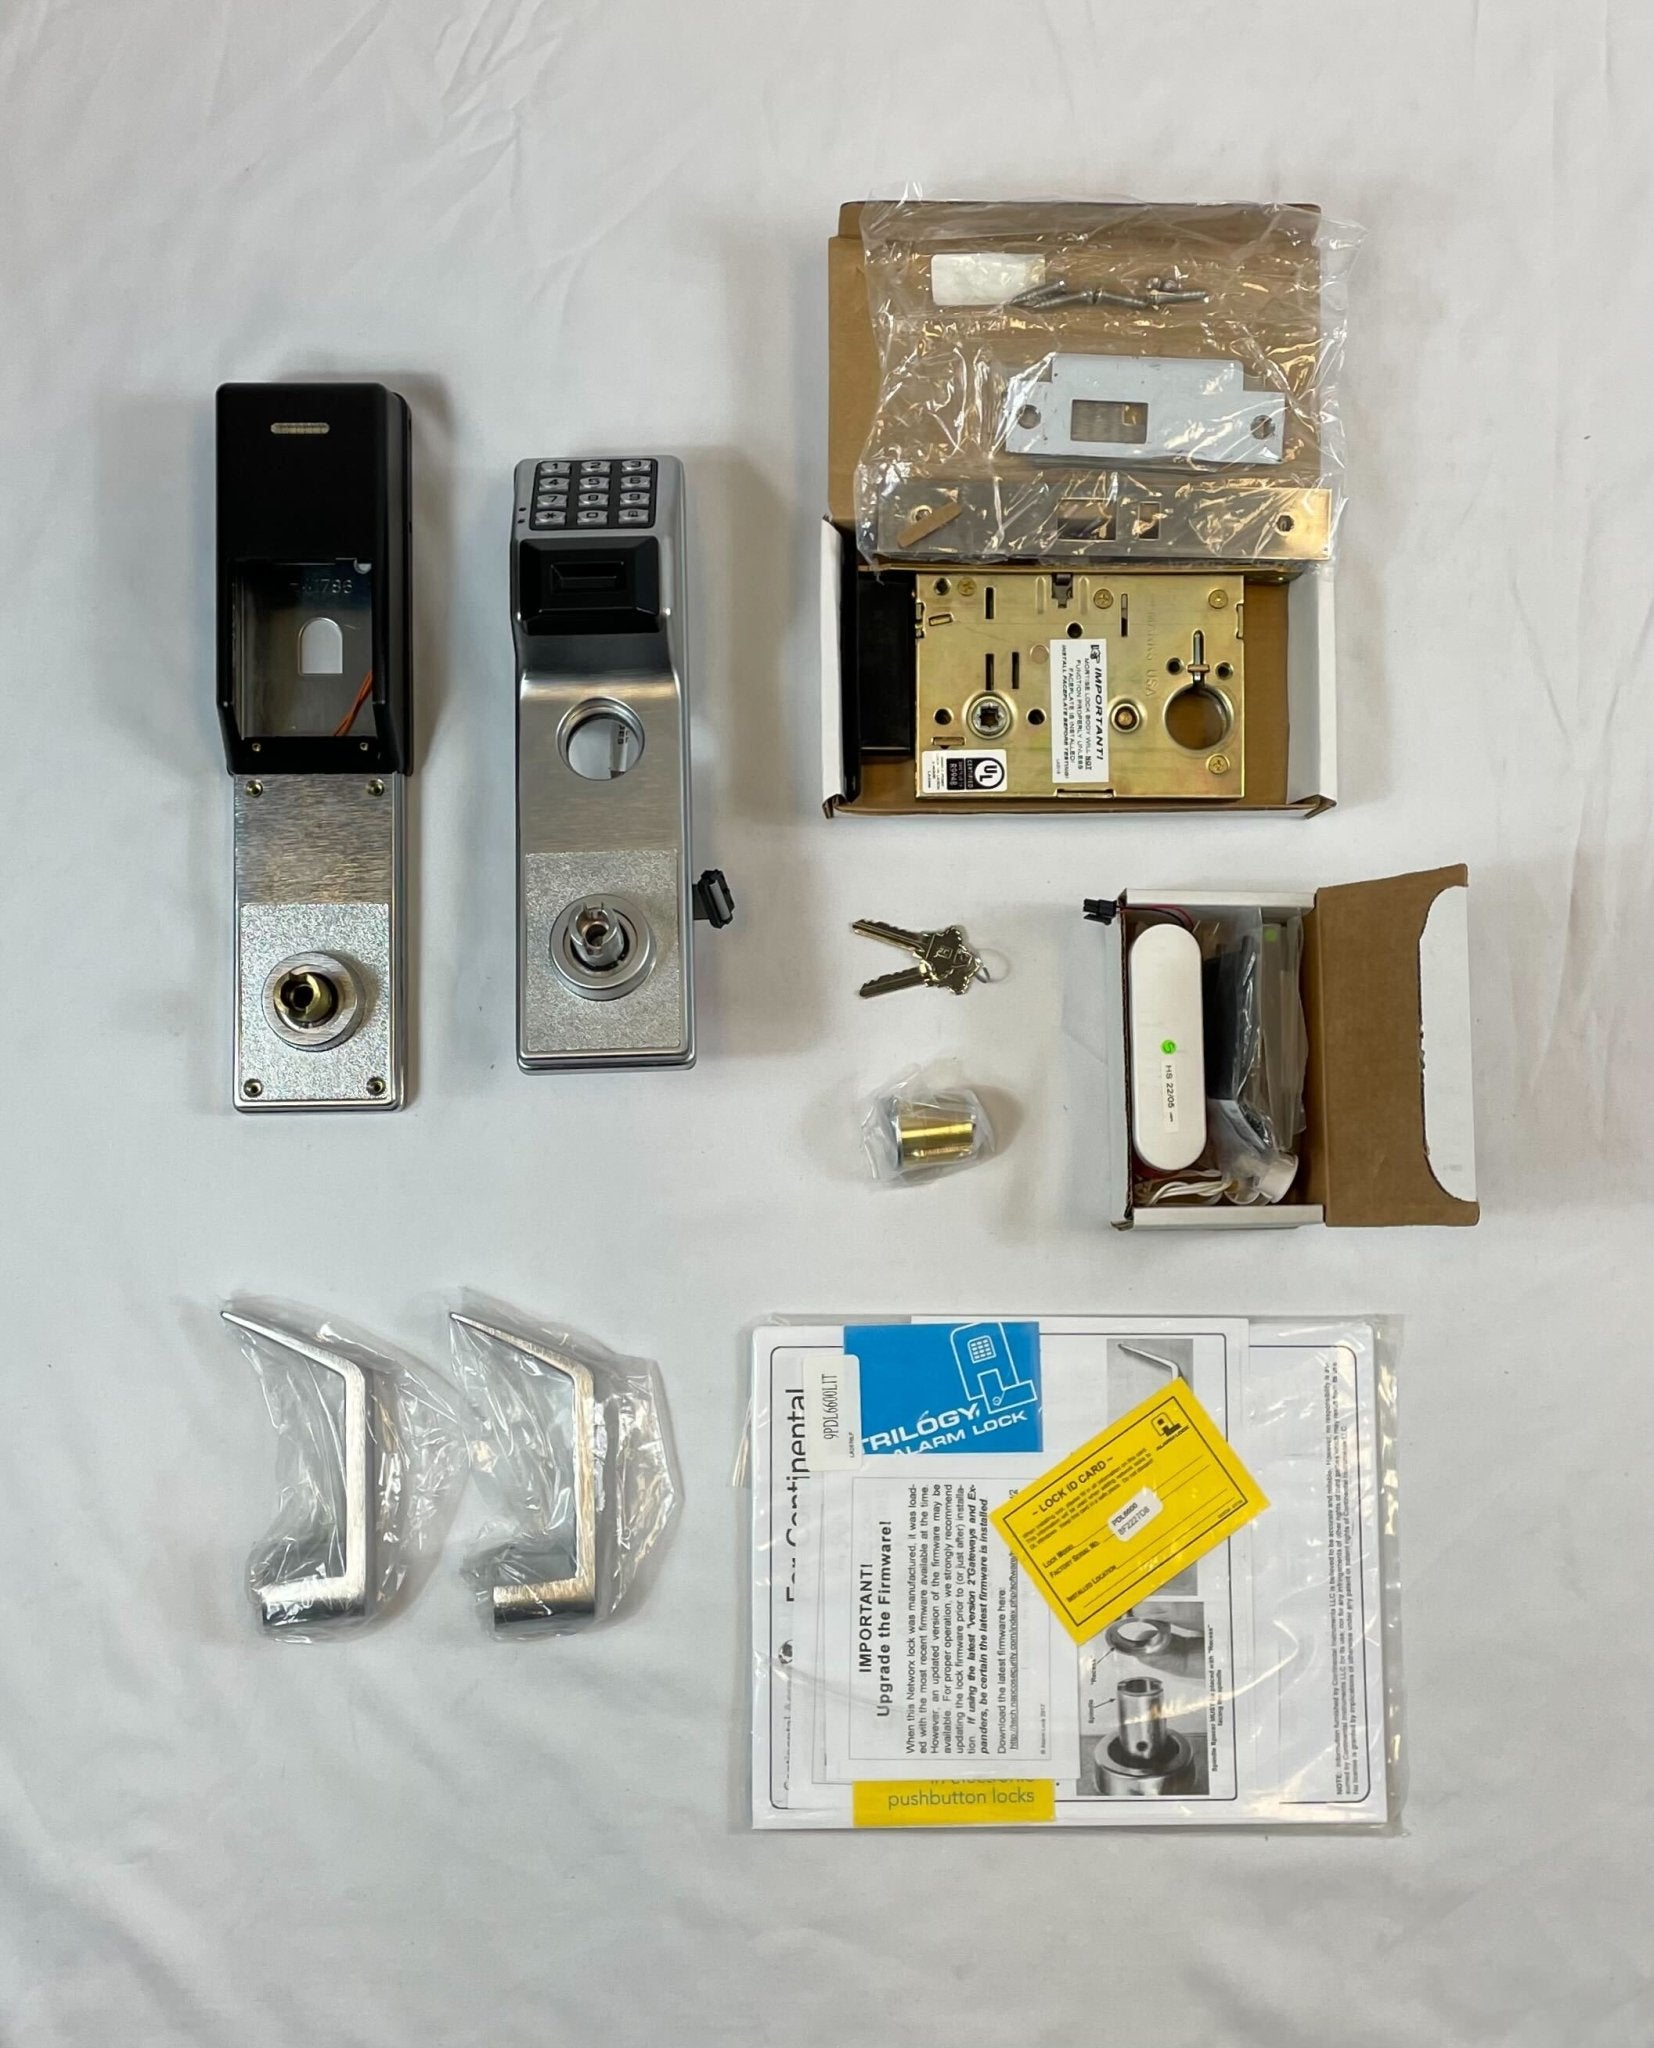 Napco PDL6600CRR/26D - The Fire Alarm Supplier